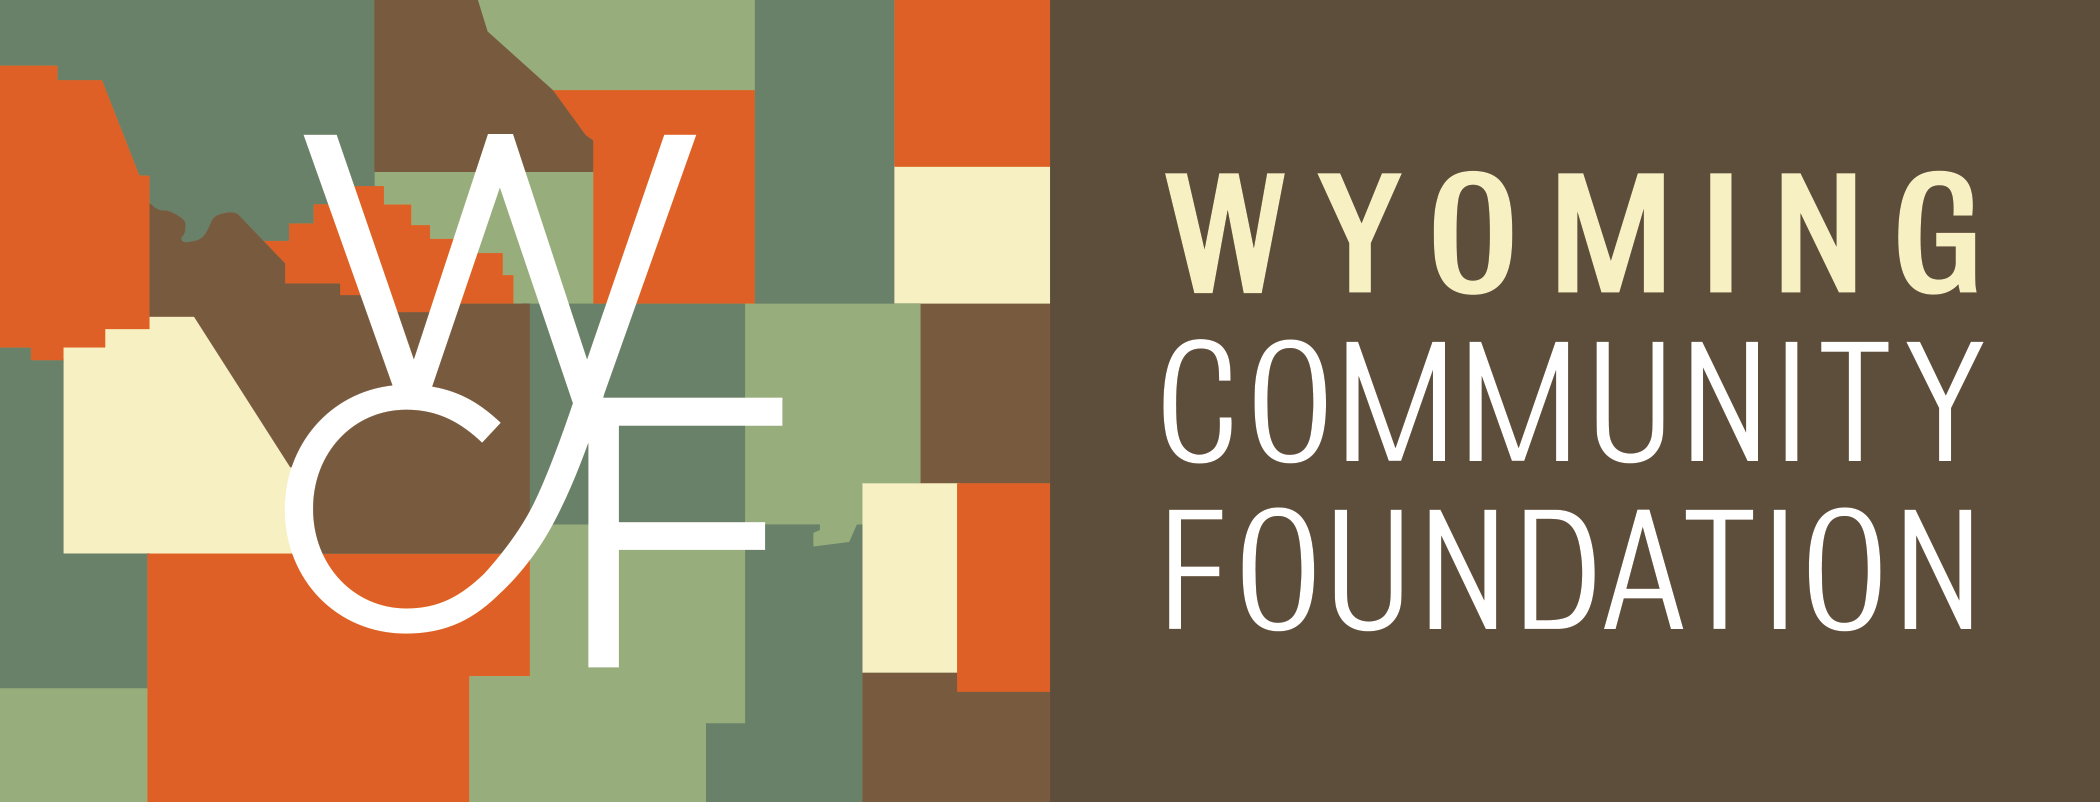 WYCF Cmyk Logo